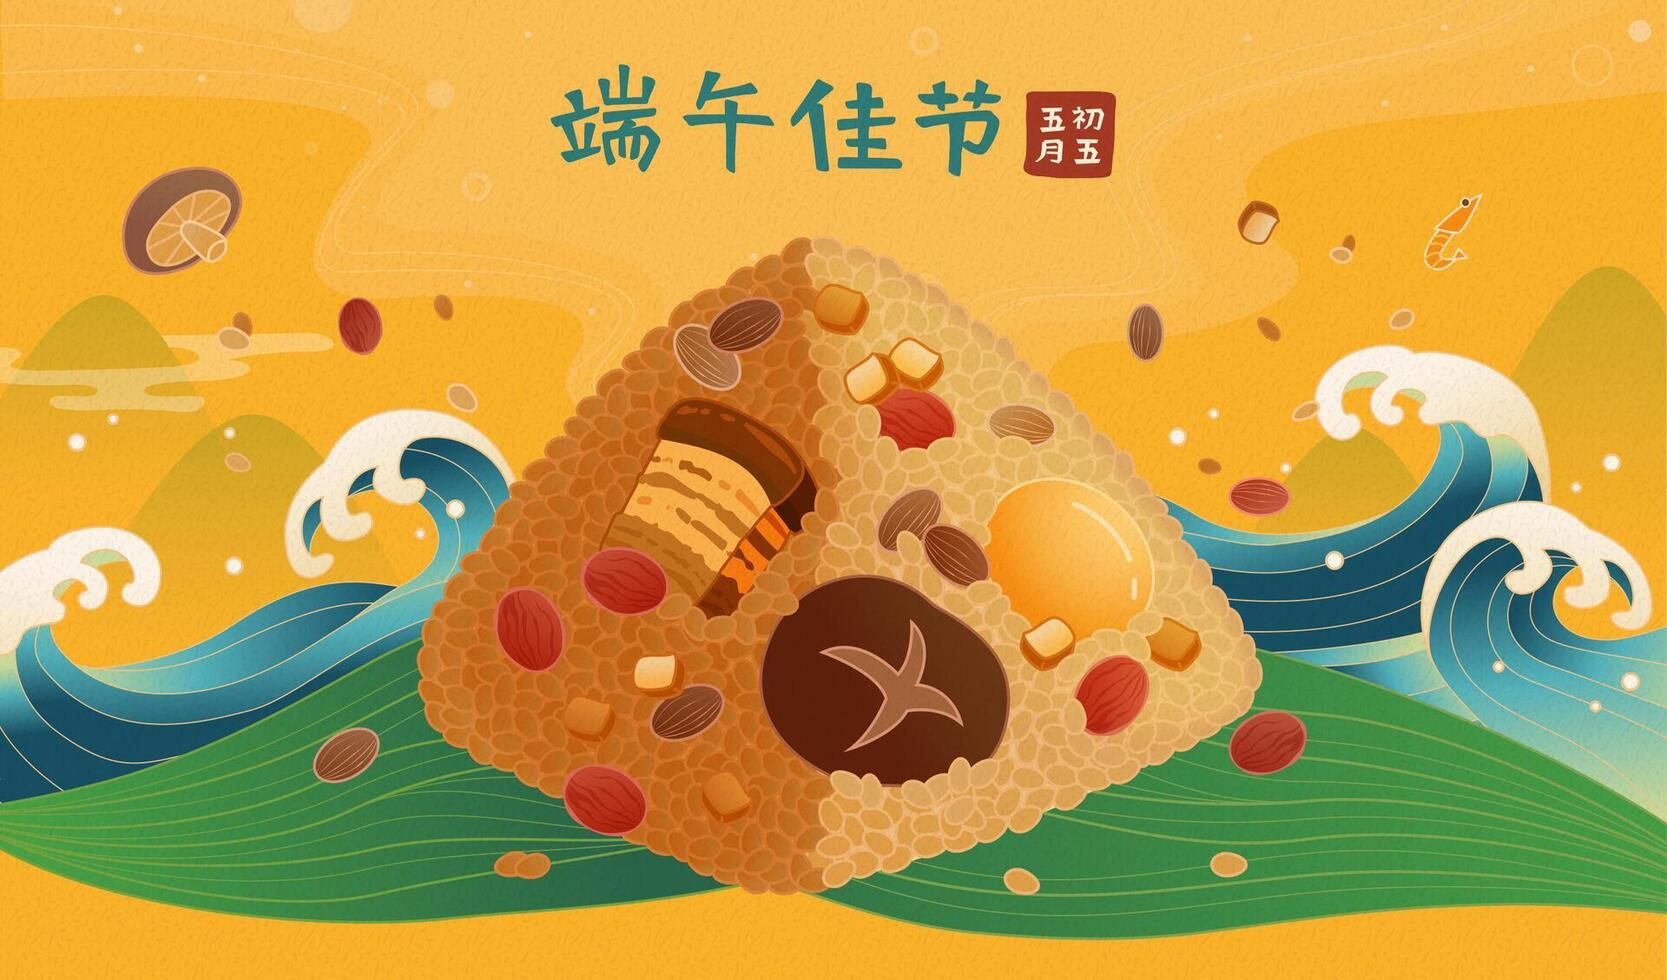 continuar barco festival póster. ilustrado zongzi en bambú hoja con mar ola en el espalda en amarillo antecedentes. texto, duanwu día festivo. mayo 5to. vector